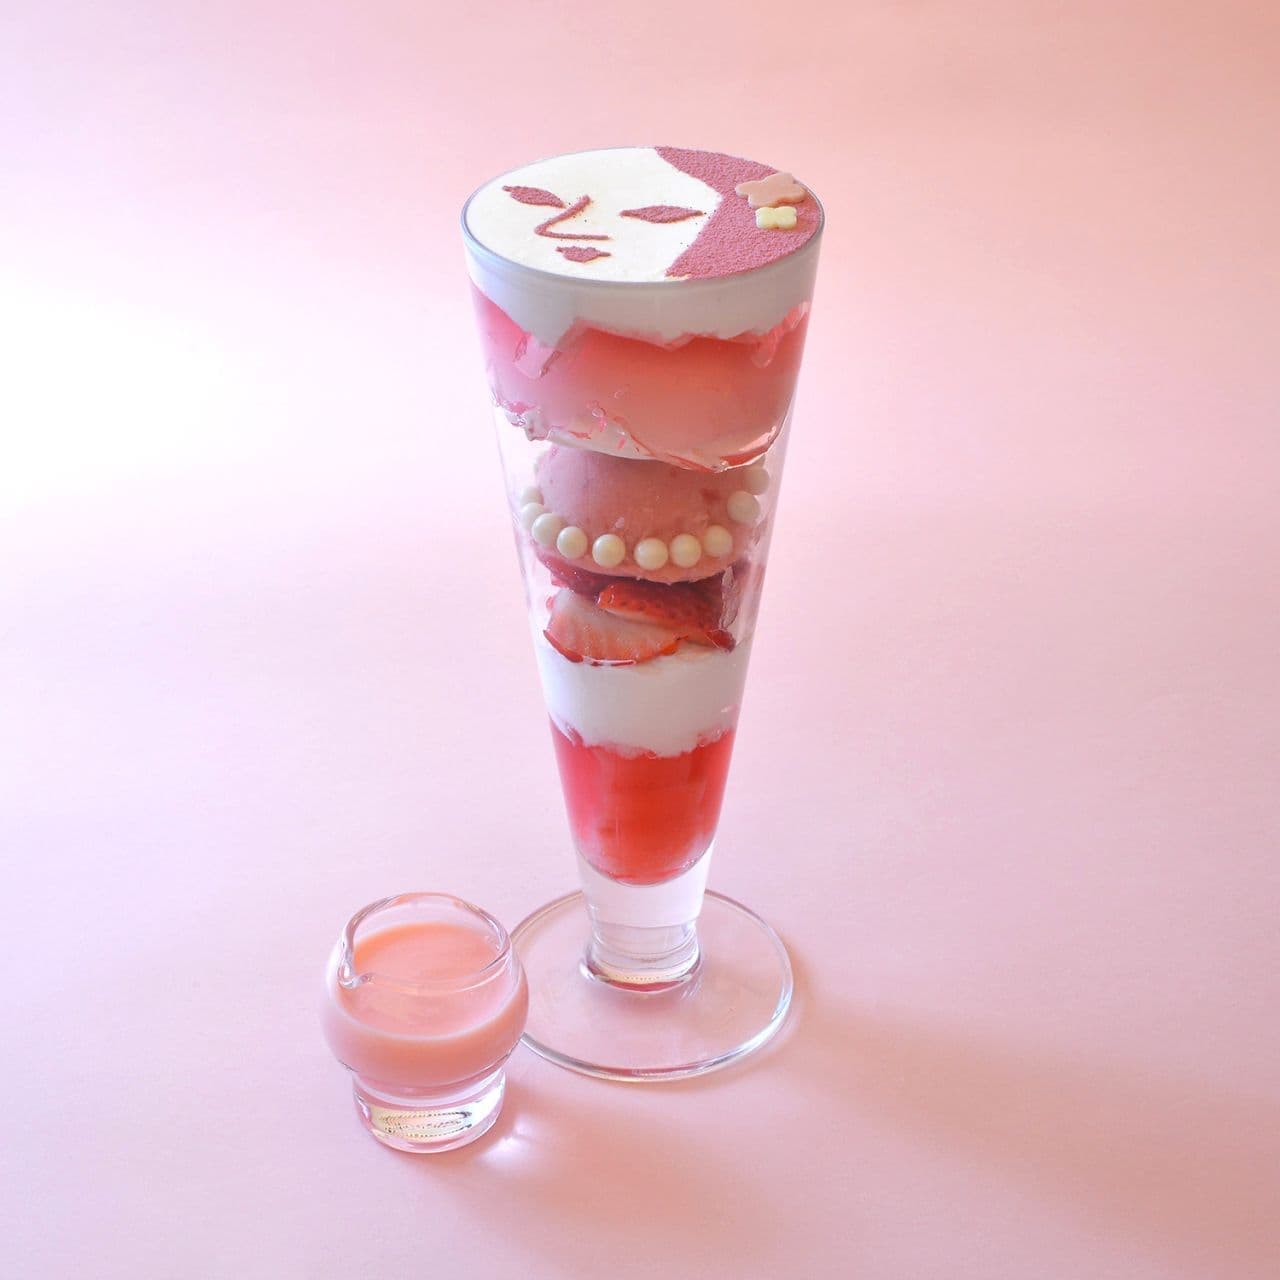 Sweets inspired by the aroma of Yojiya Cafe "Hanahonoka